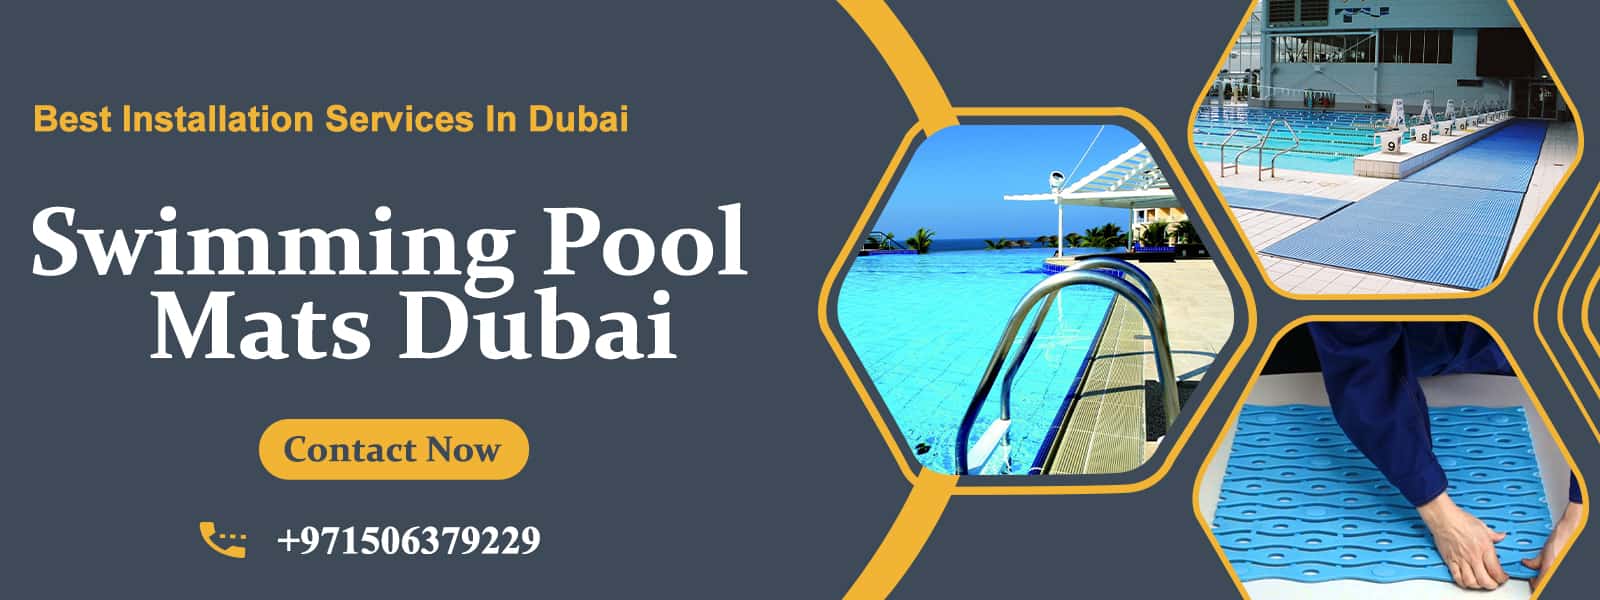 Swimming-Pool--Mats-Dubai-Banner-2